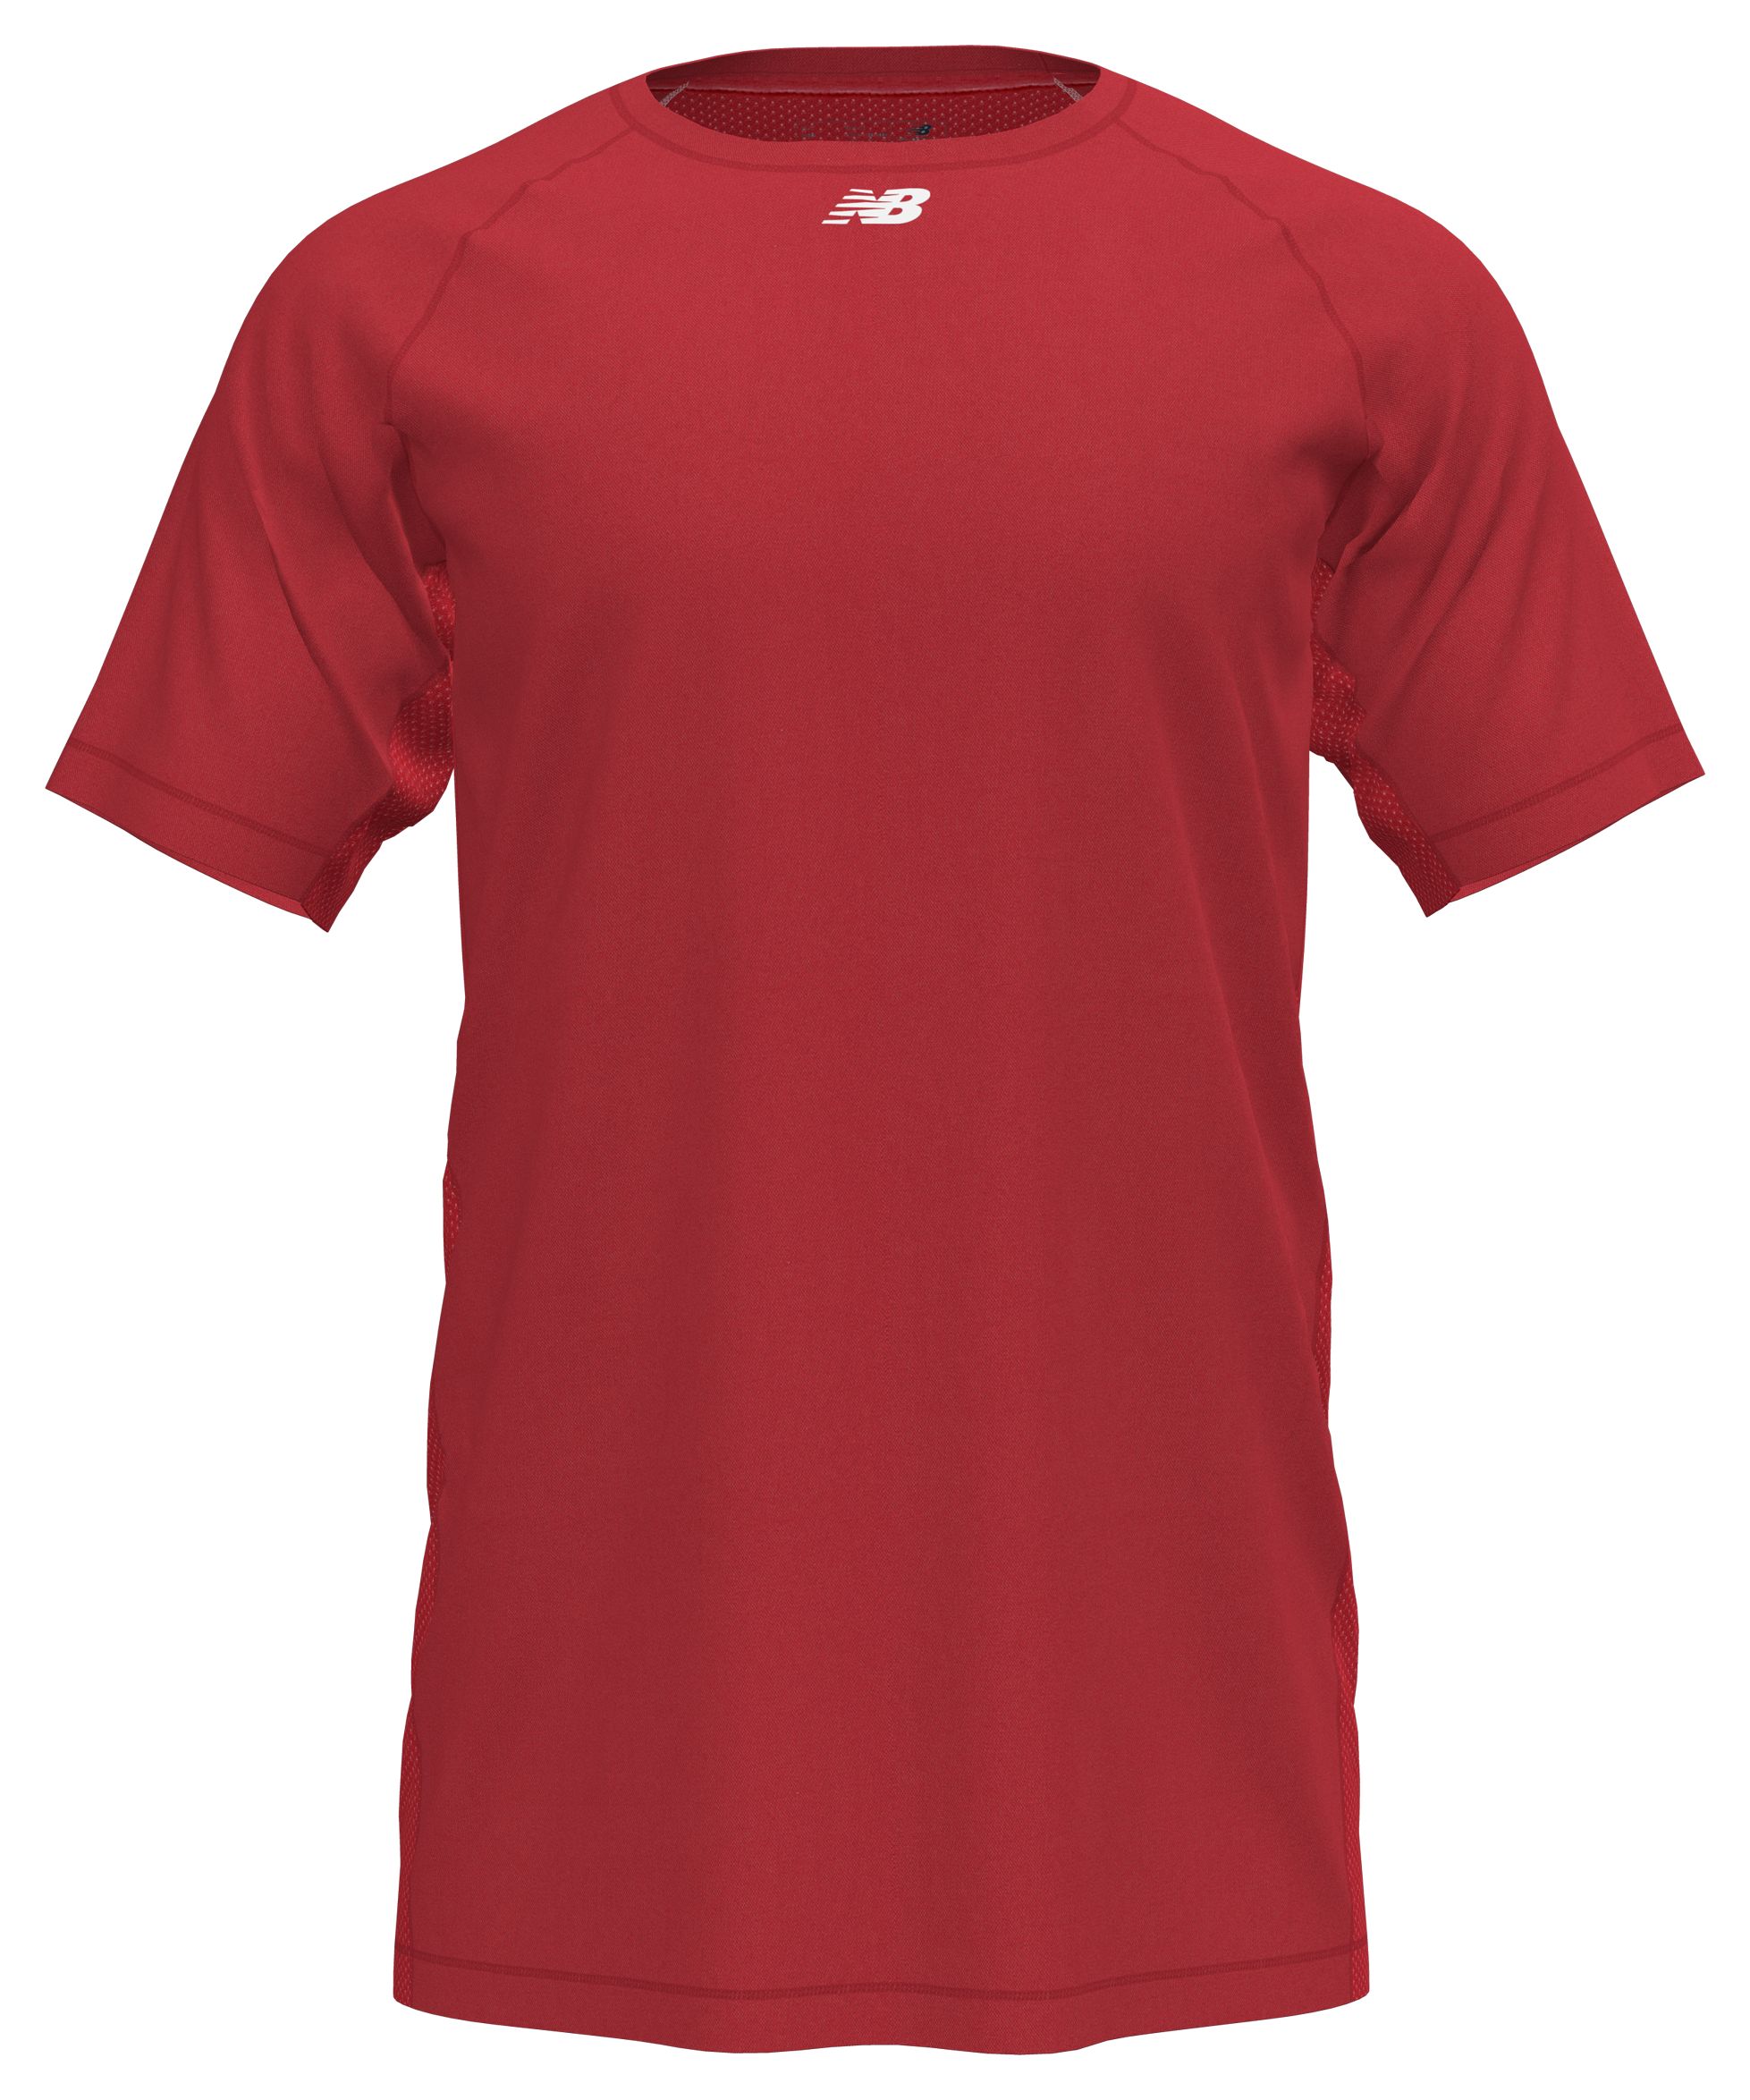 YBA Shirts - Get Custom Business, Sport and School Apparel